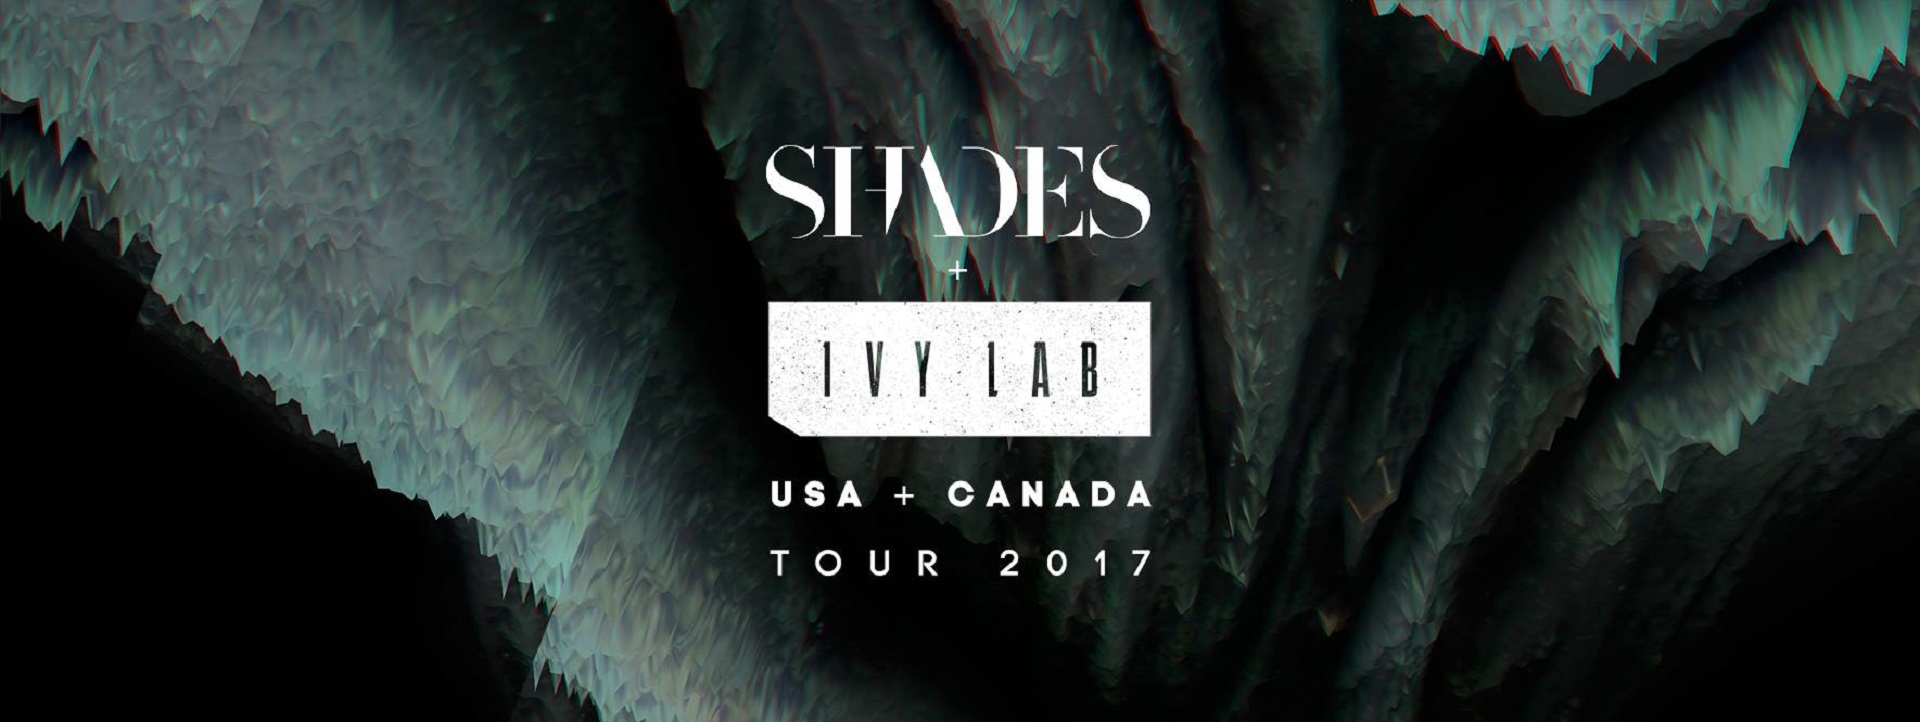 Shades, Ivy Lab, 2017 Tour